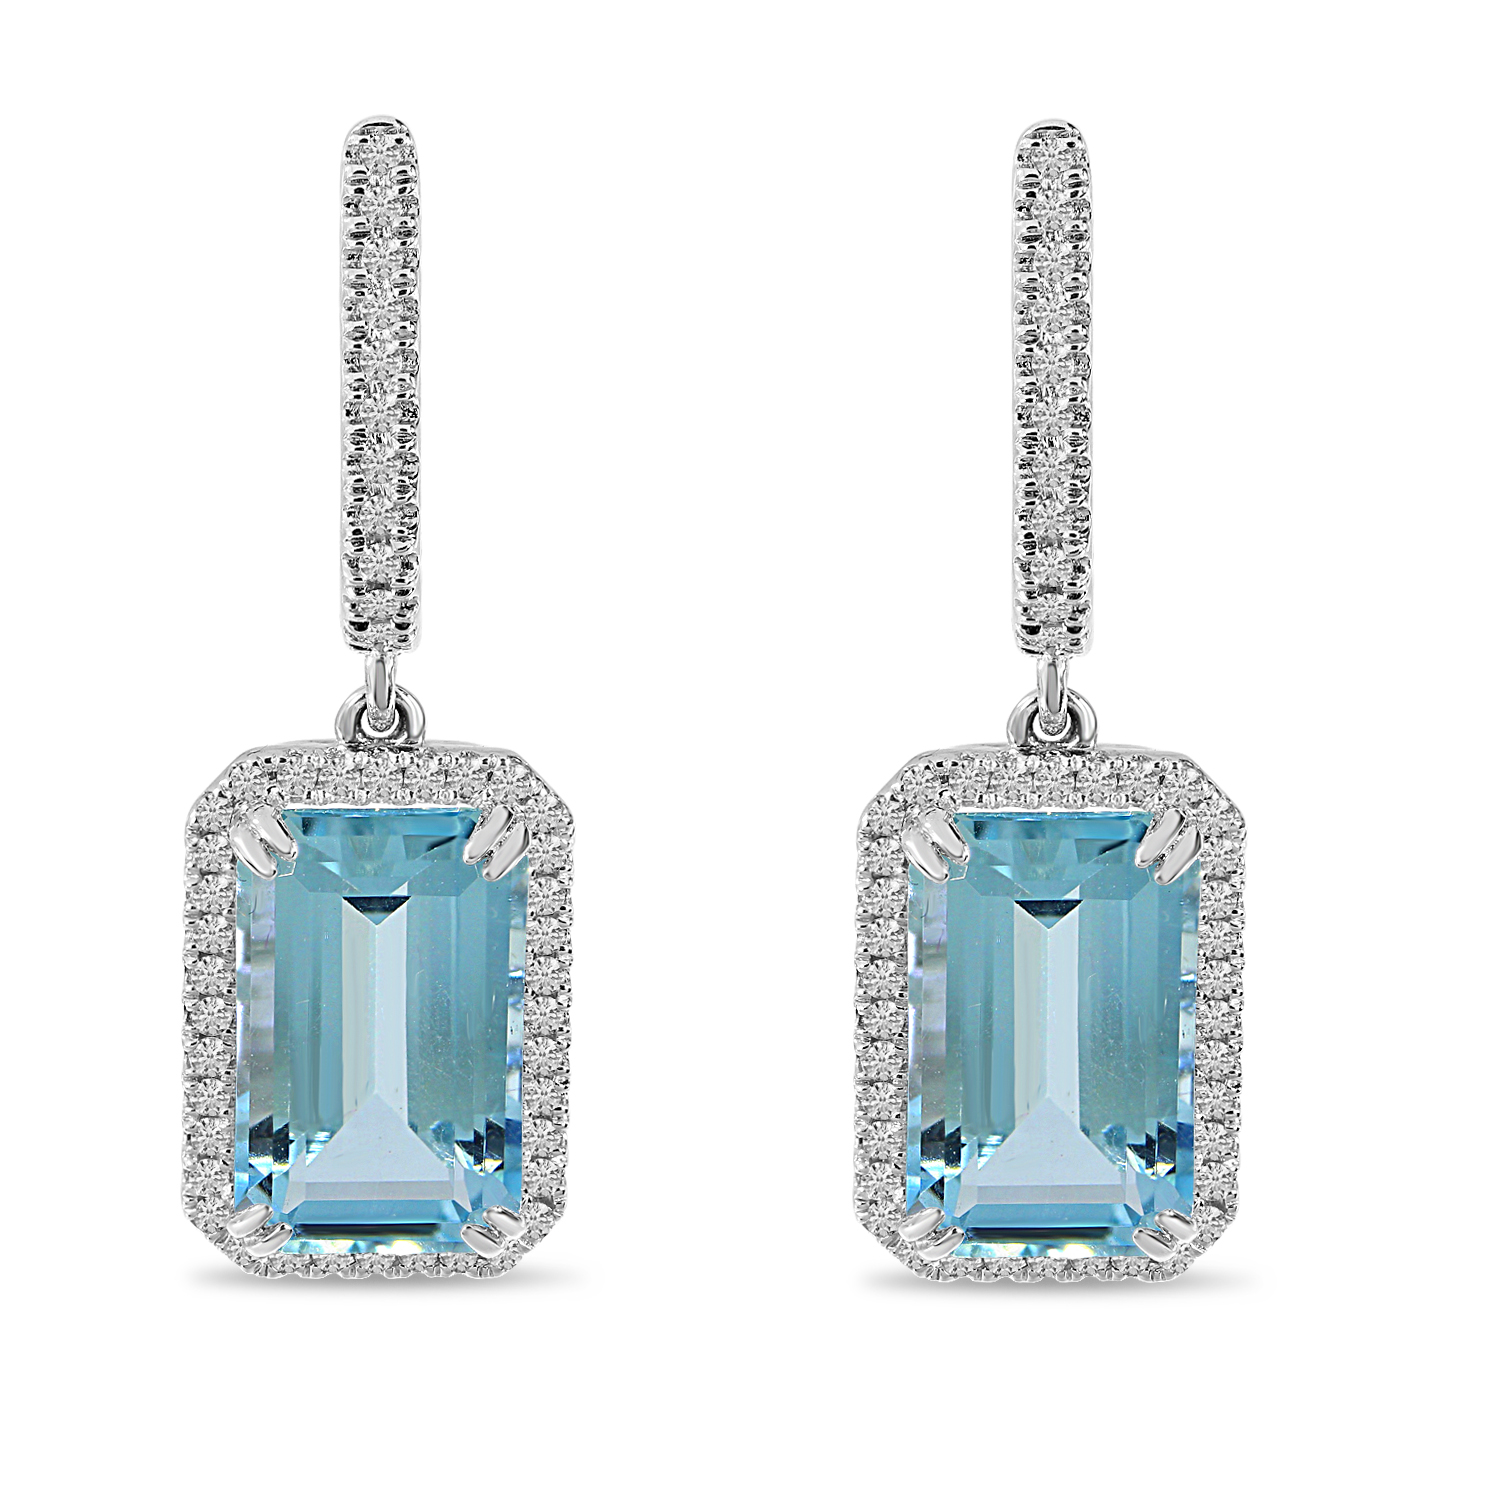 14K White Gold Large Octagon Blue Topaz and Diamond Semi Precious Drop Earrings